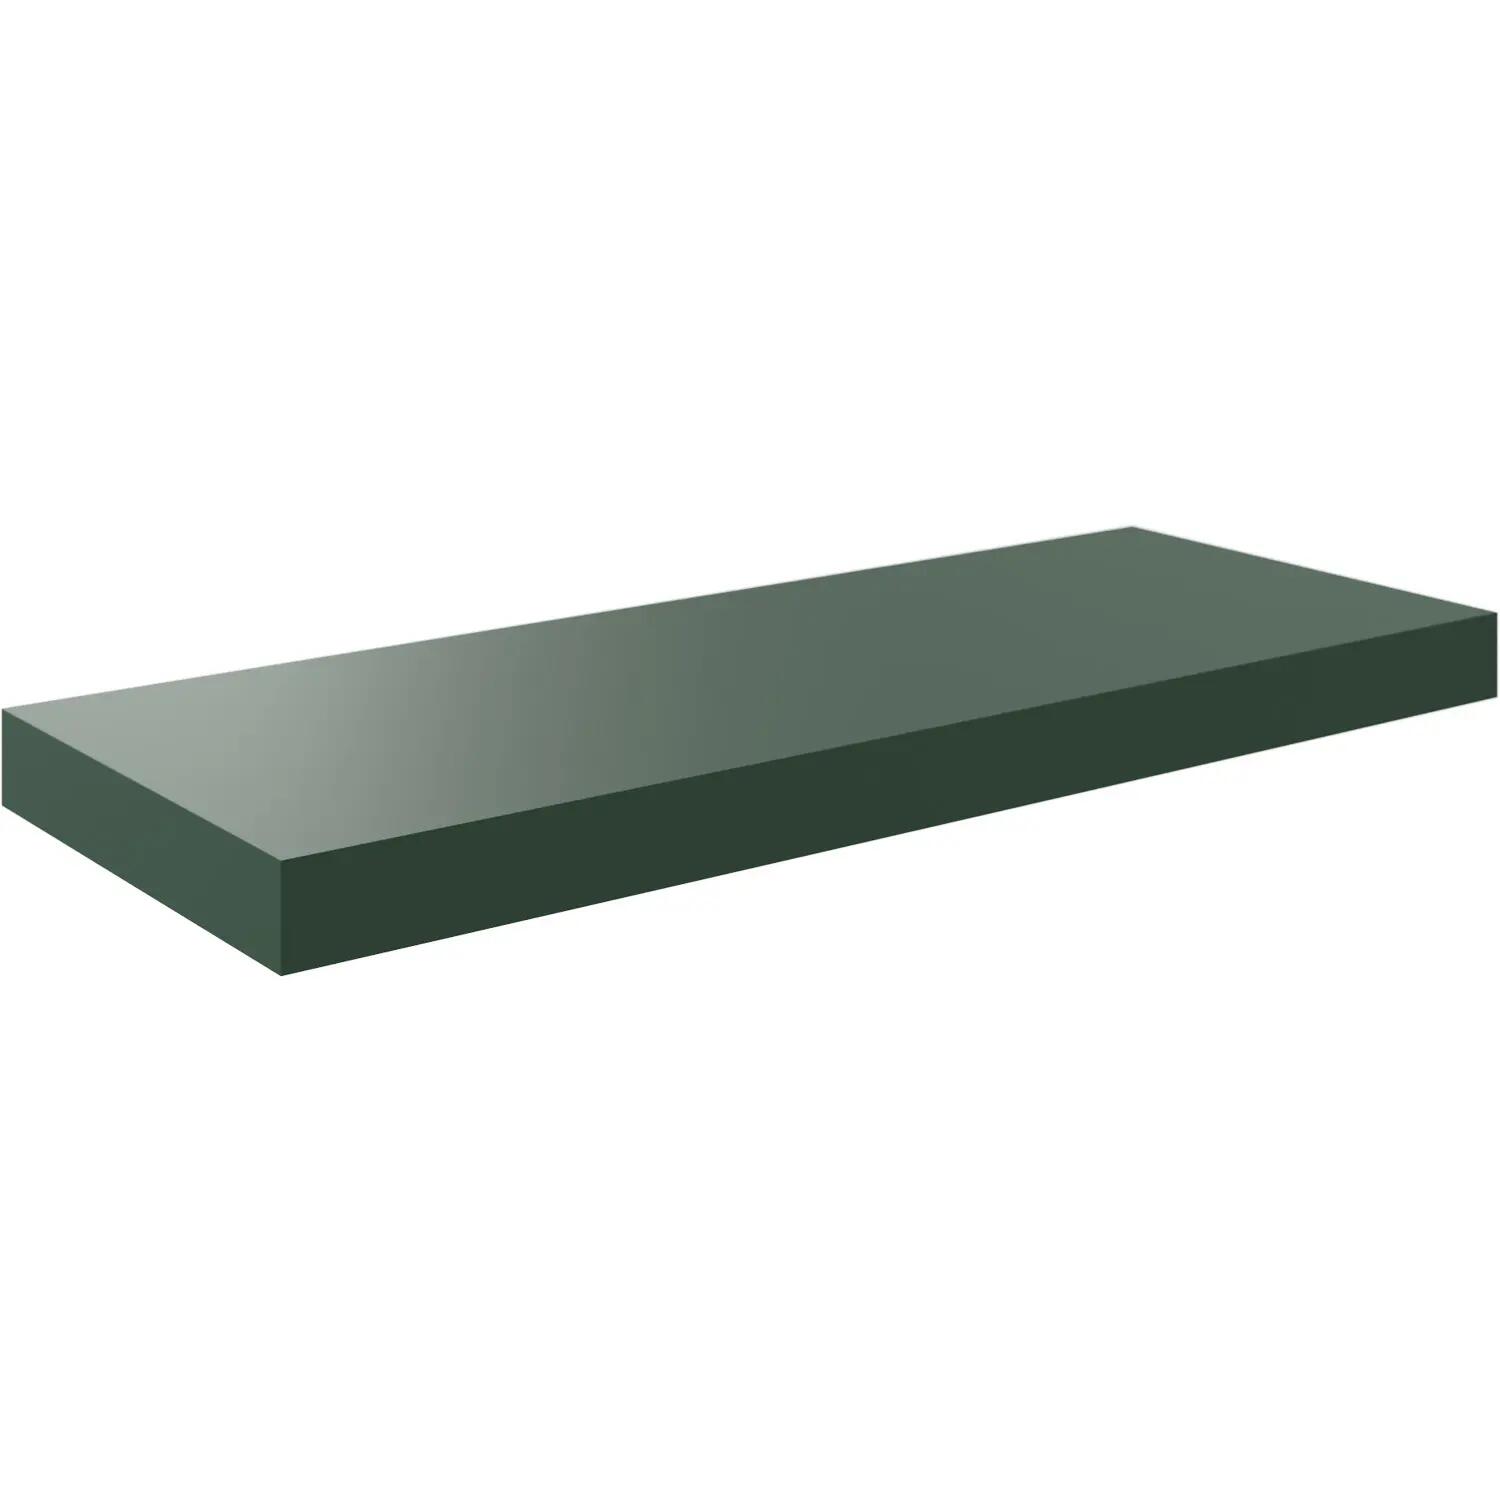 Estante spaceo rectangular en color verde de 60x3.8x23.5 cm